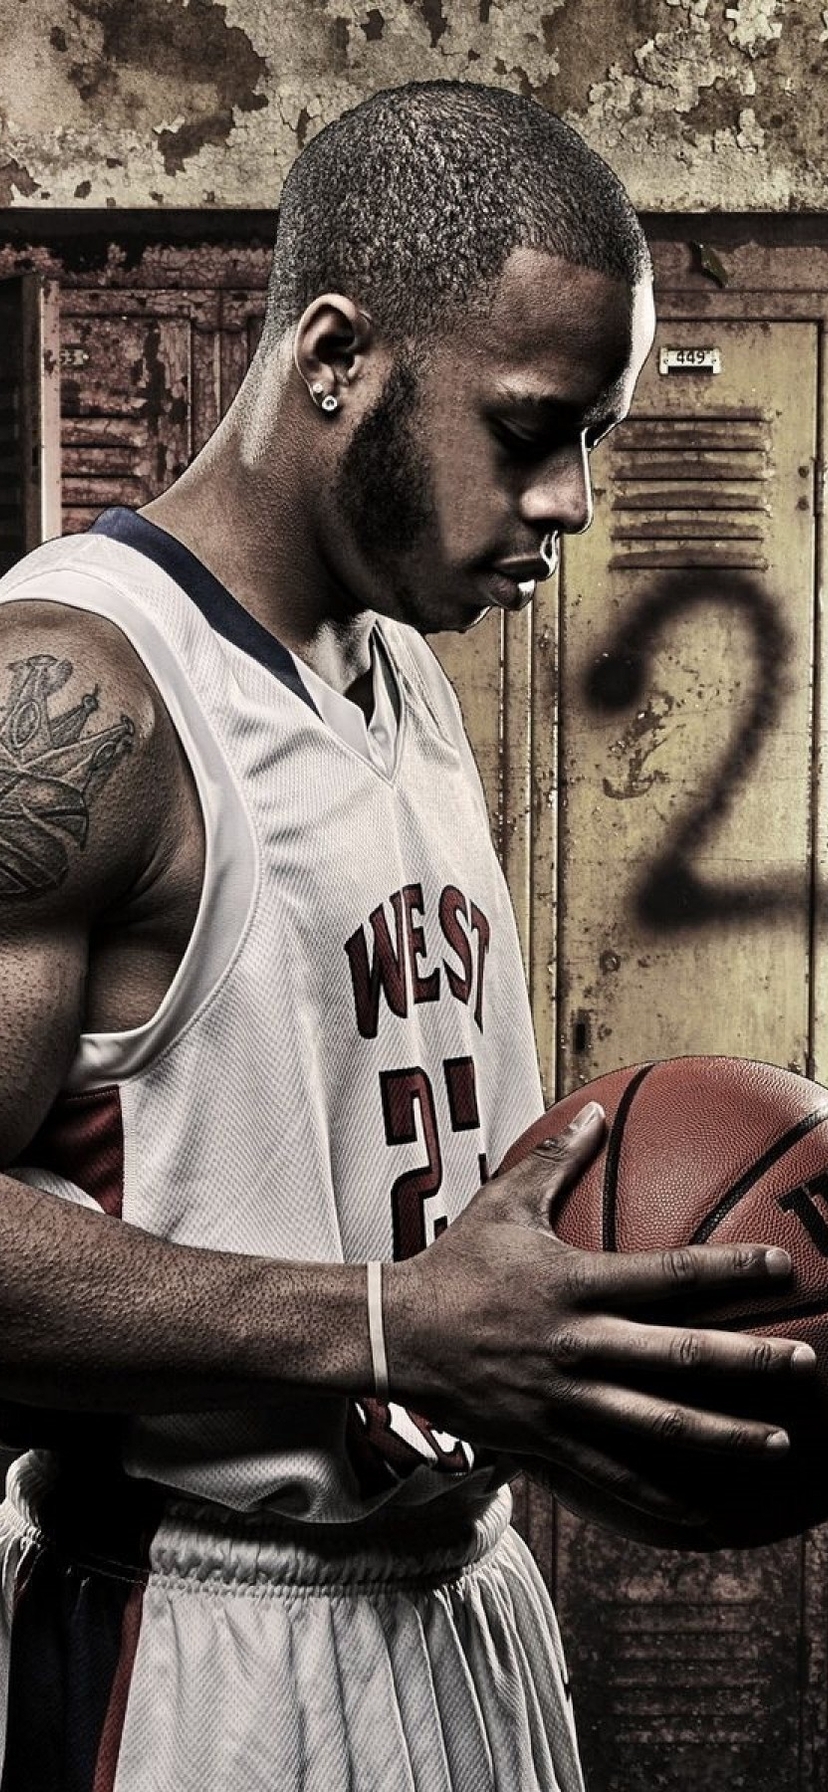 Image: Basketball, basketball, athletic game, ball, room, tattoo, muscle